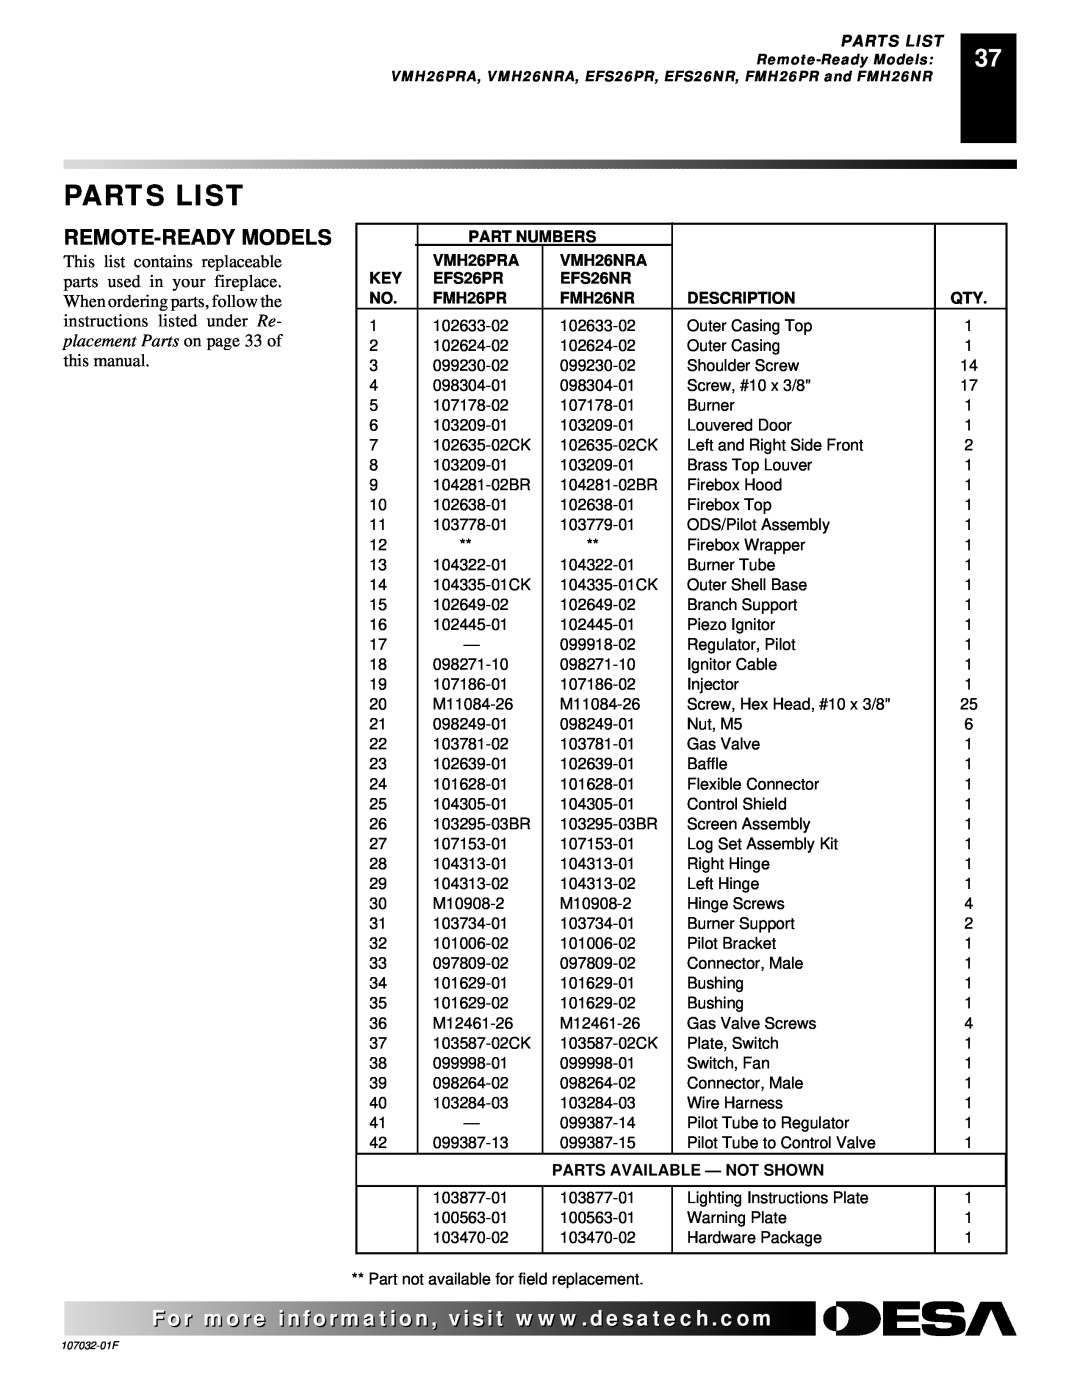 Desa VMH26PRA Remote-Readymodels, Parts List, Part Numbers, VMH26NRA, EFS26PR, EFS26NR, FMH26PR, FMH26NR, Description 